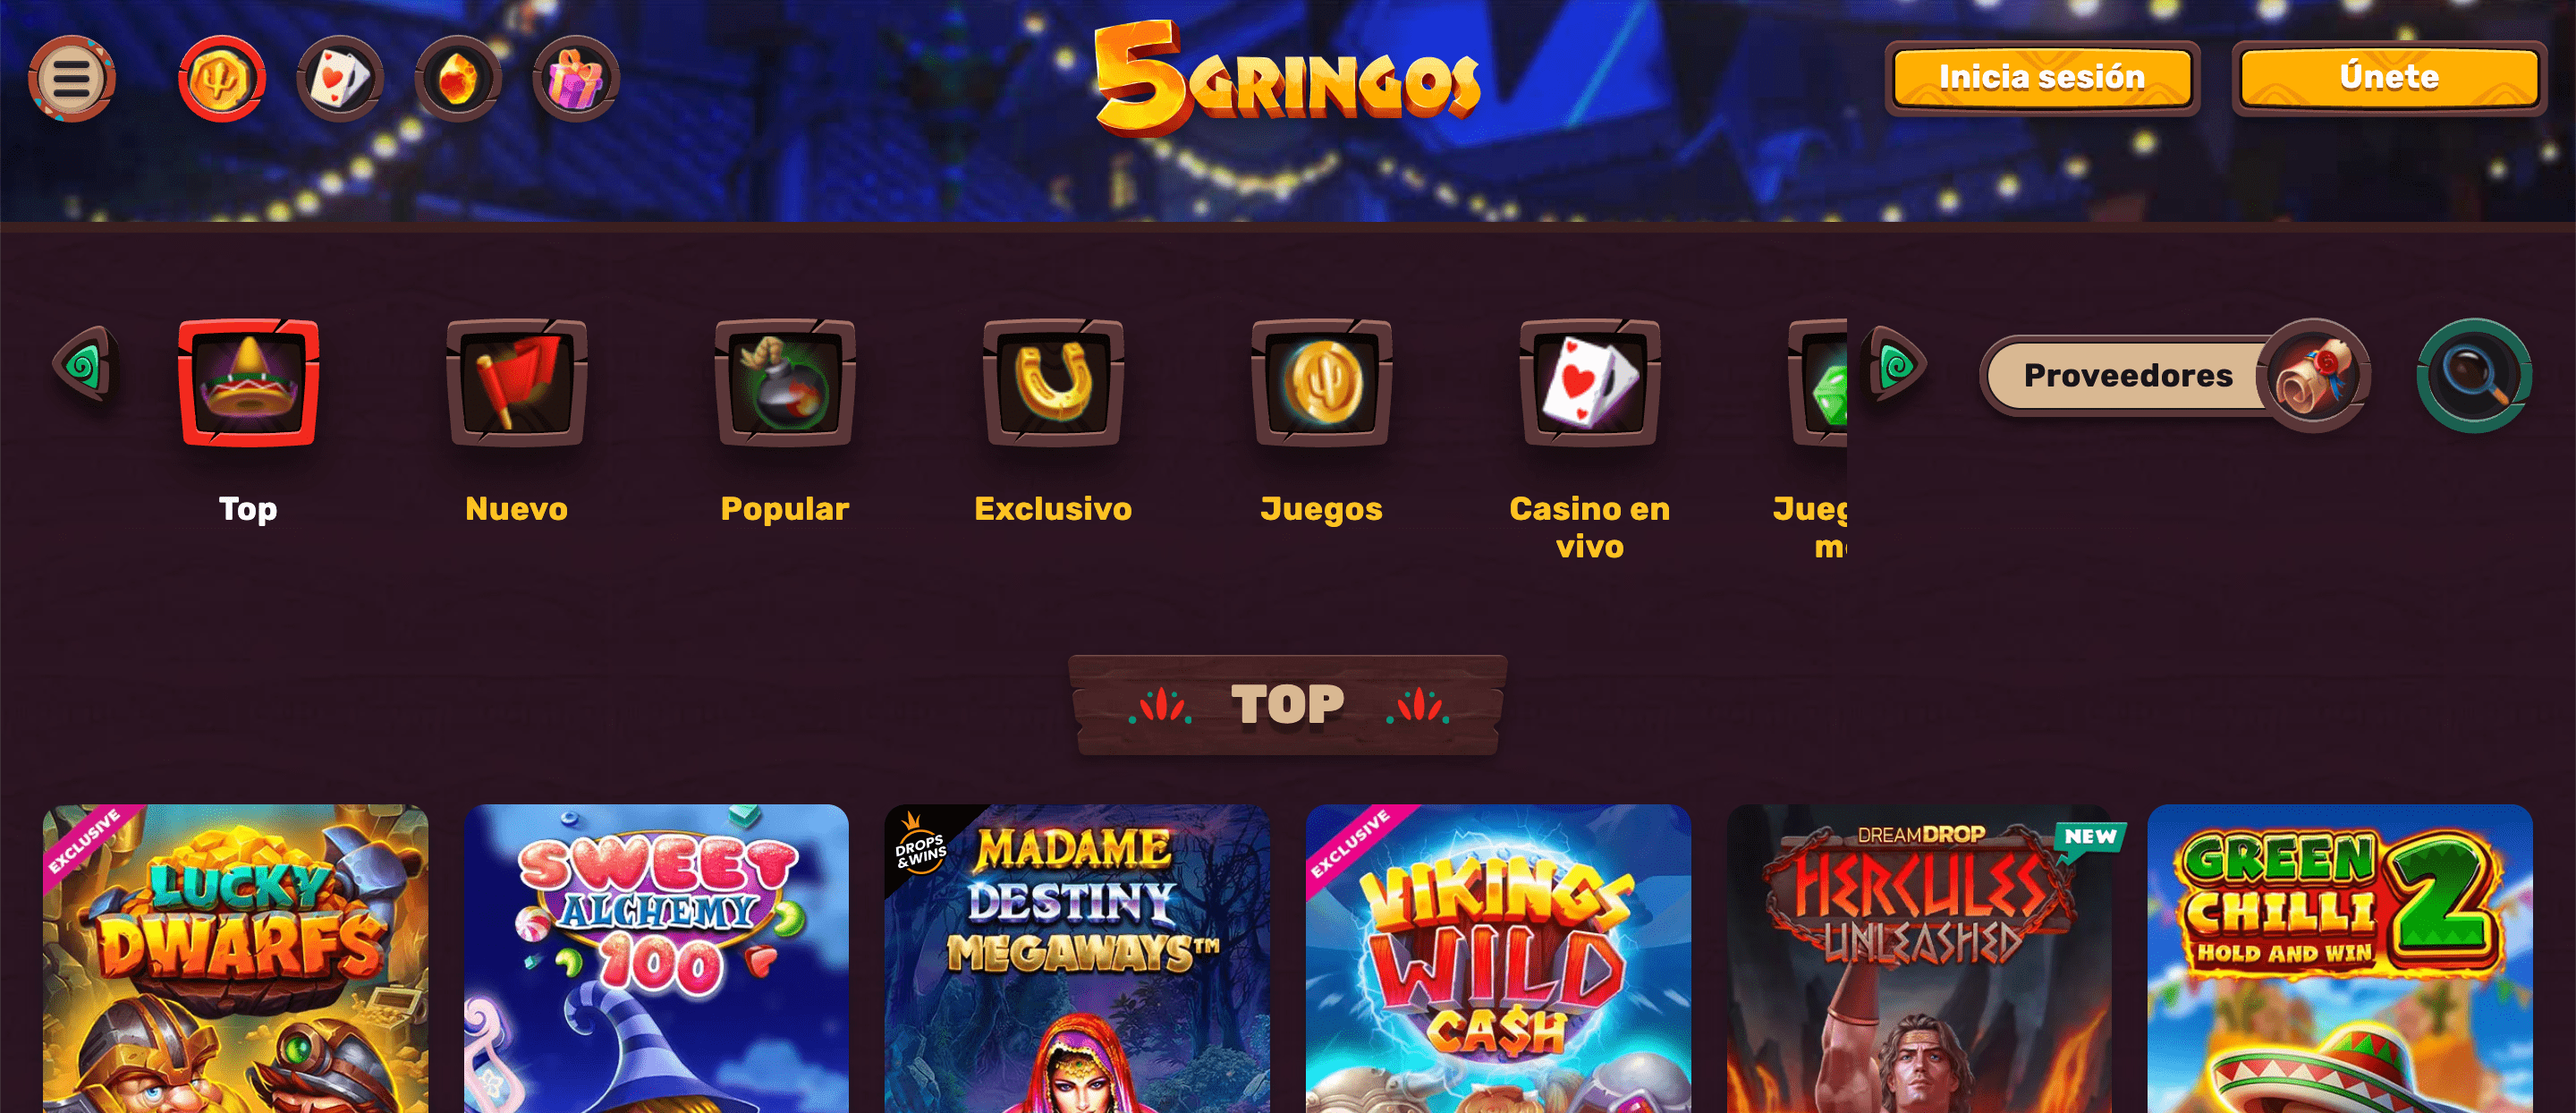 5Gringos Homepage